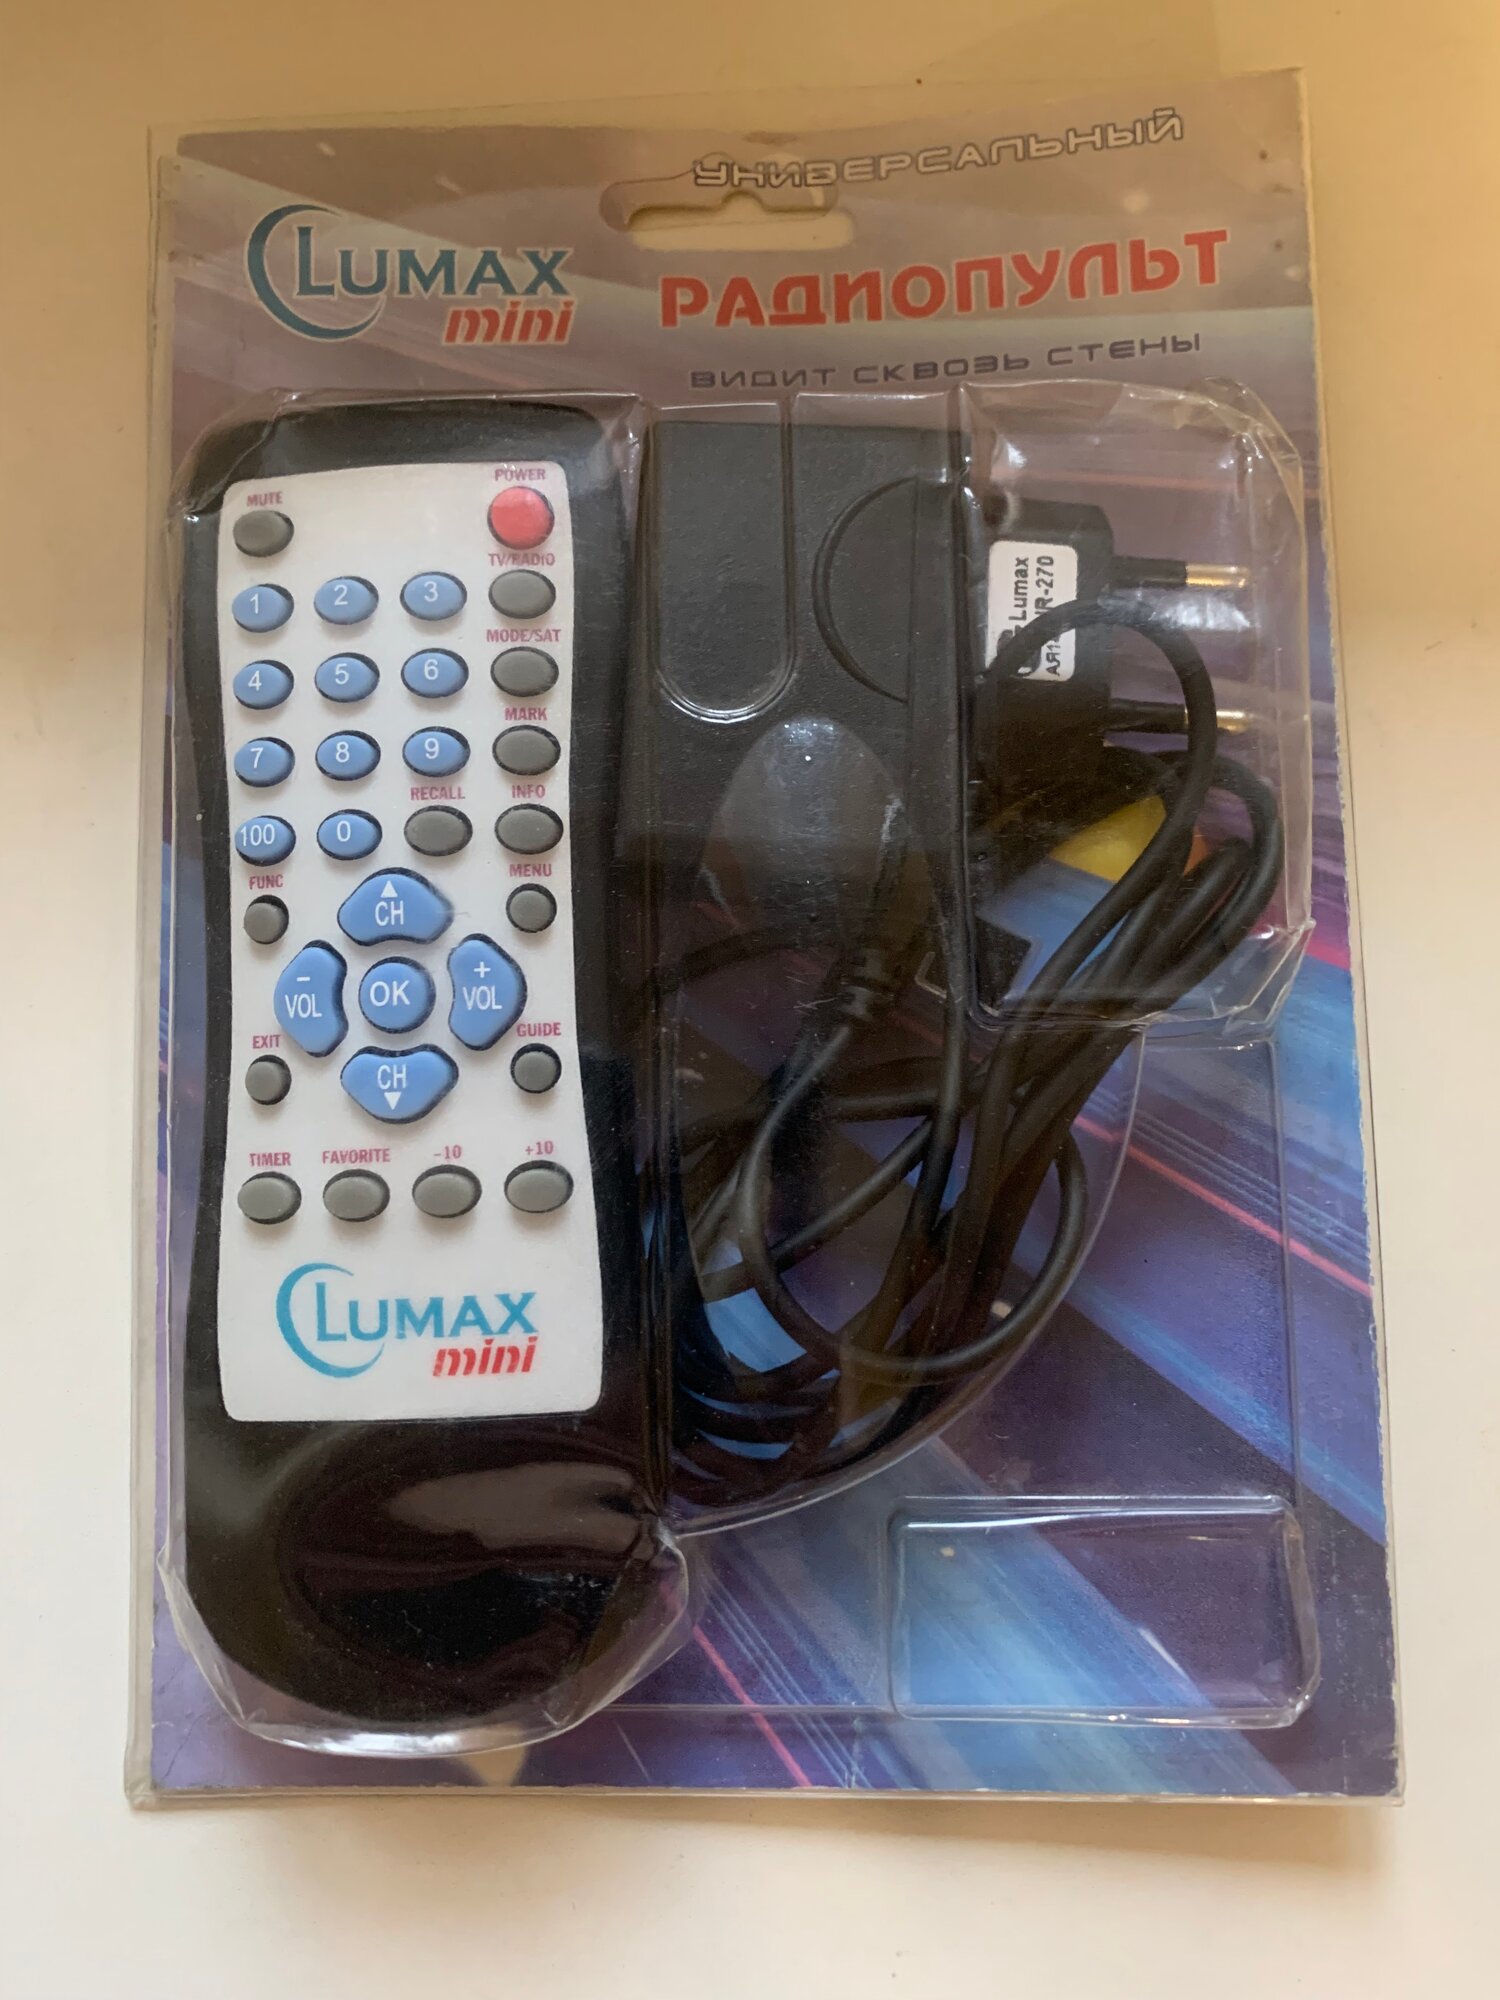 Lumax mini радиопульт